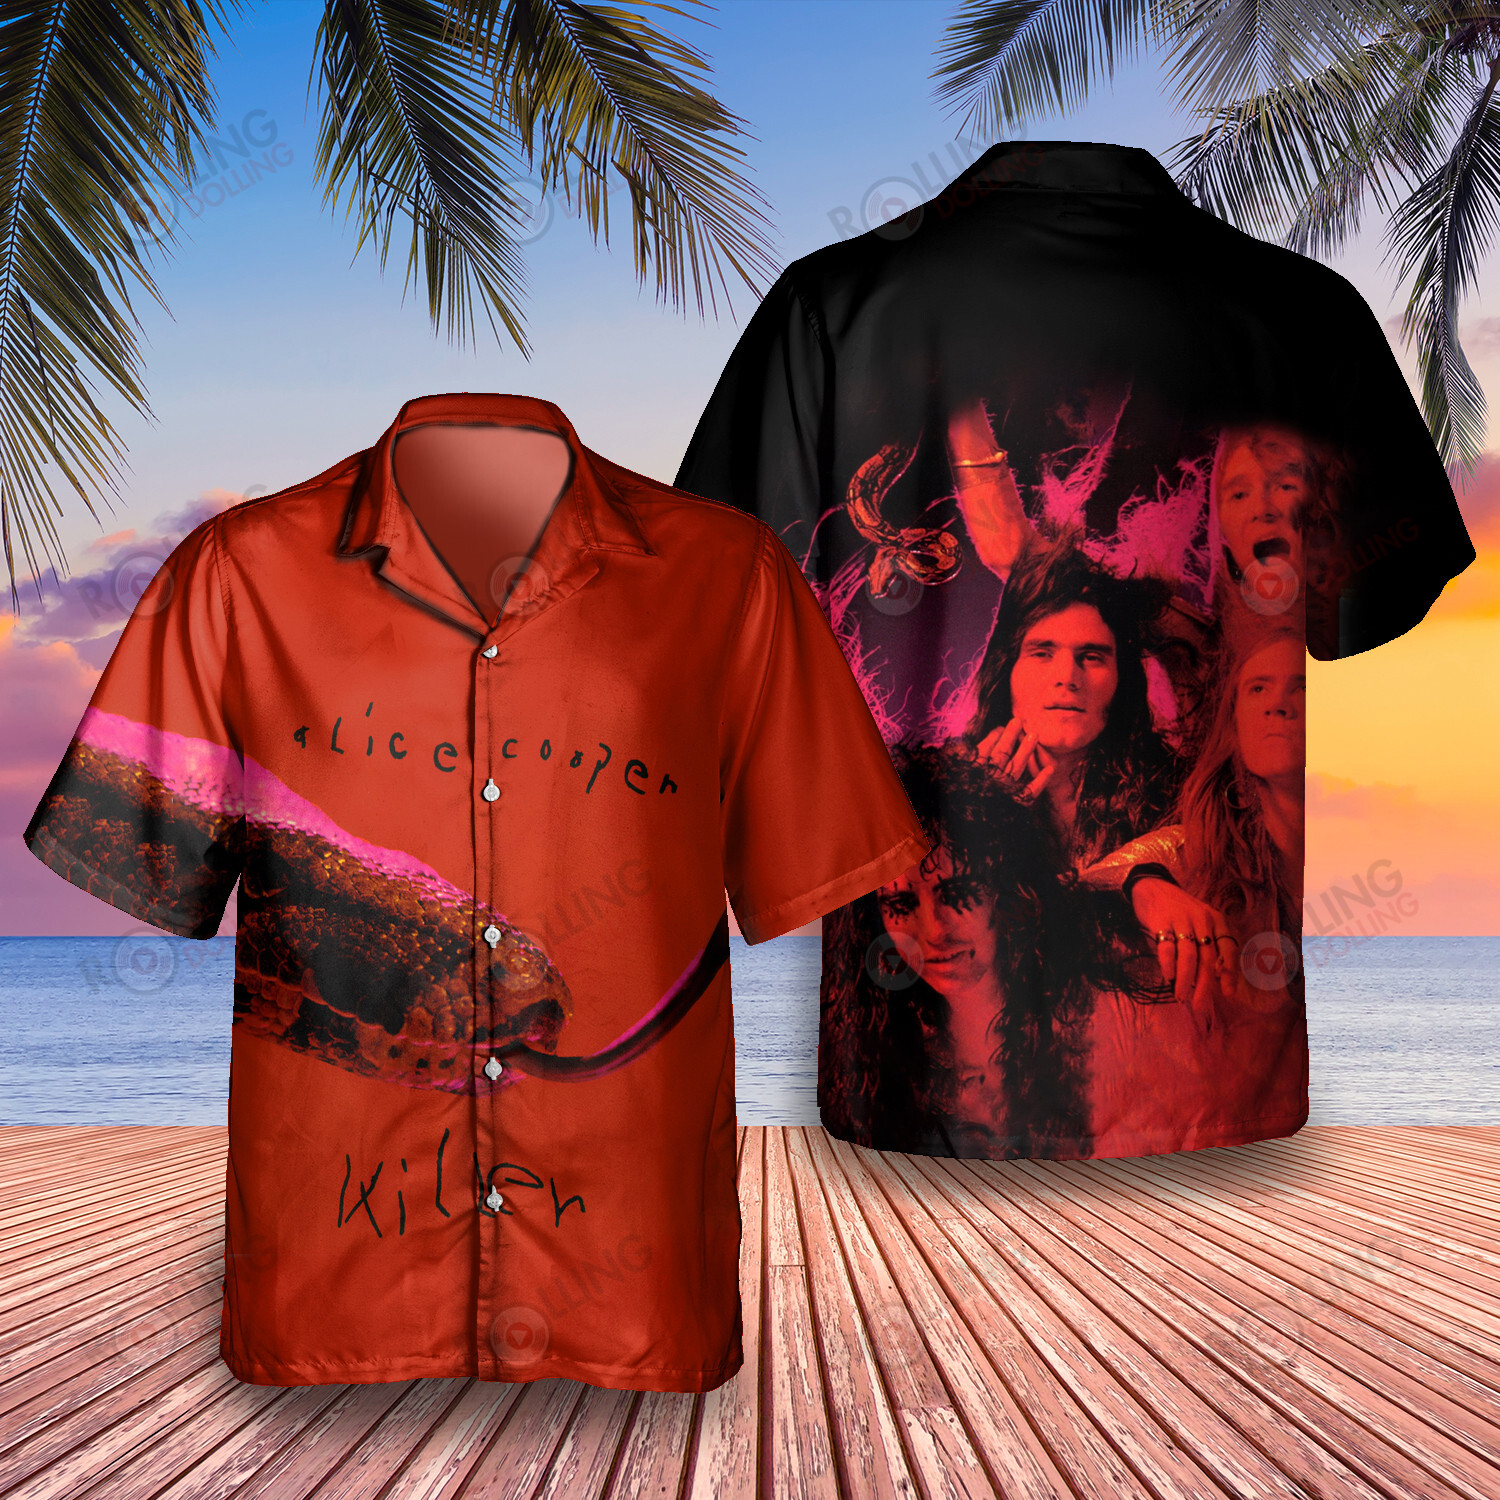 HOT Alice Cooper Killer Album Tropical Shirt1